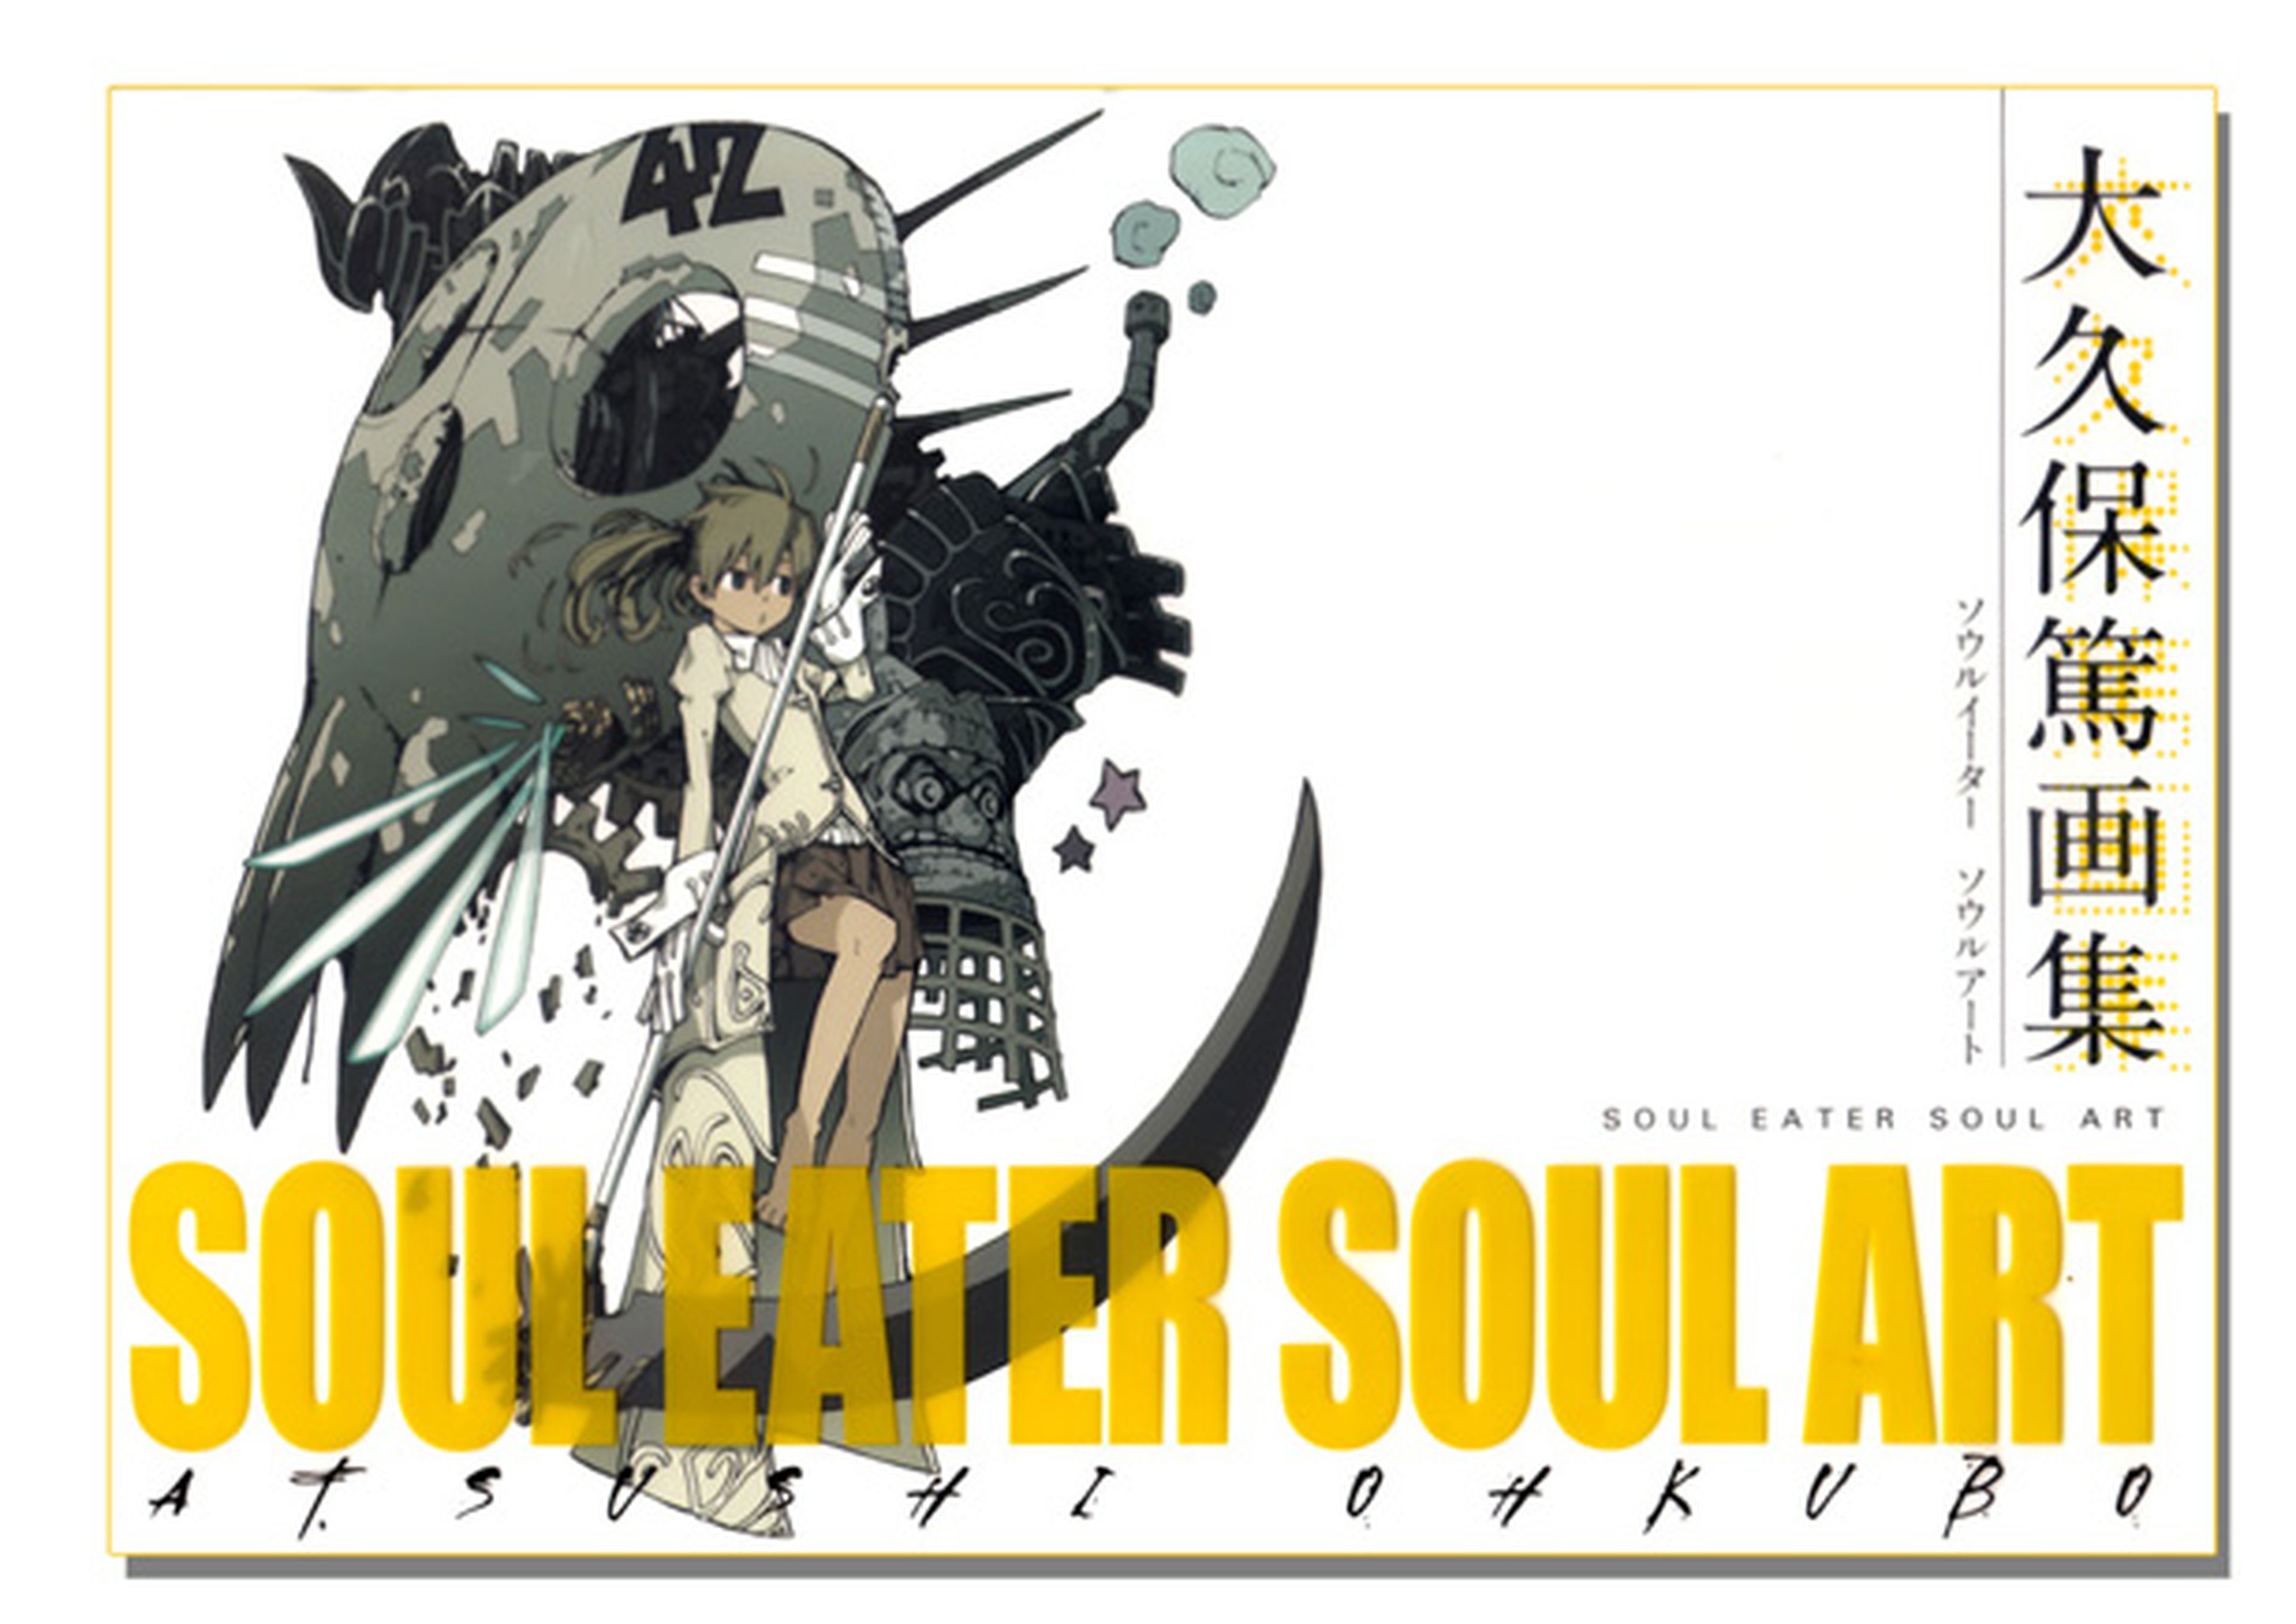 Los artbooks de Soul Eater y Fairy Tail llegarán a España